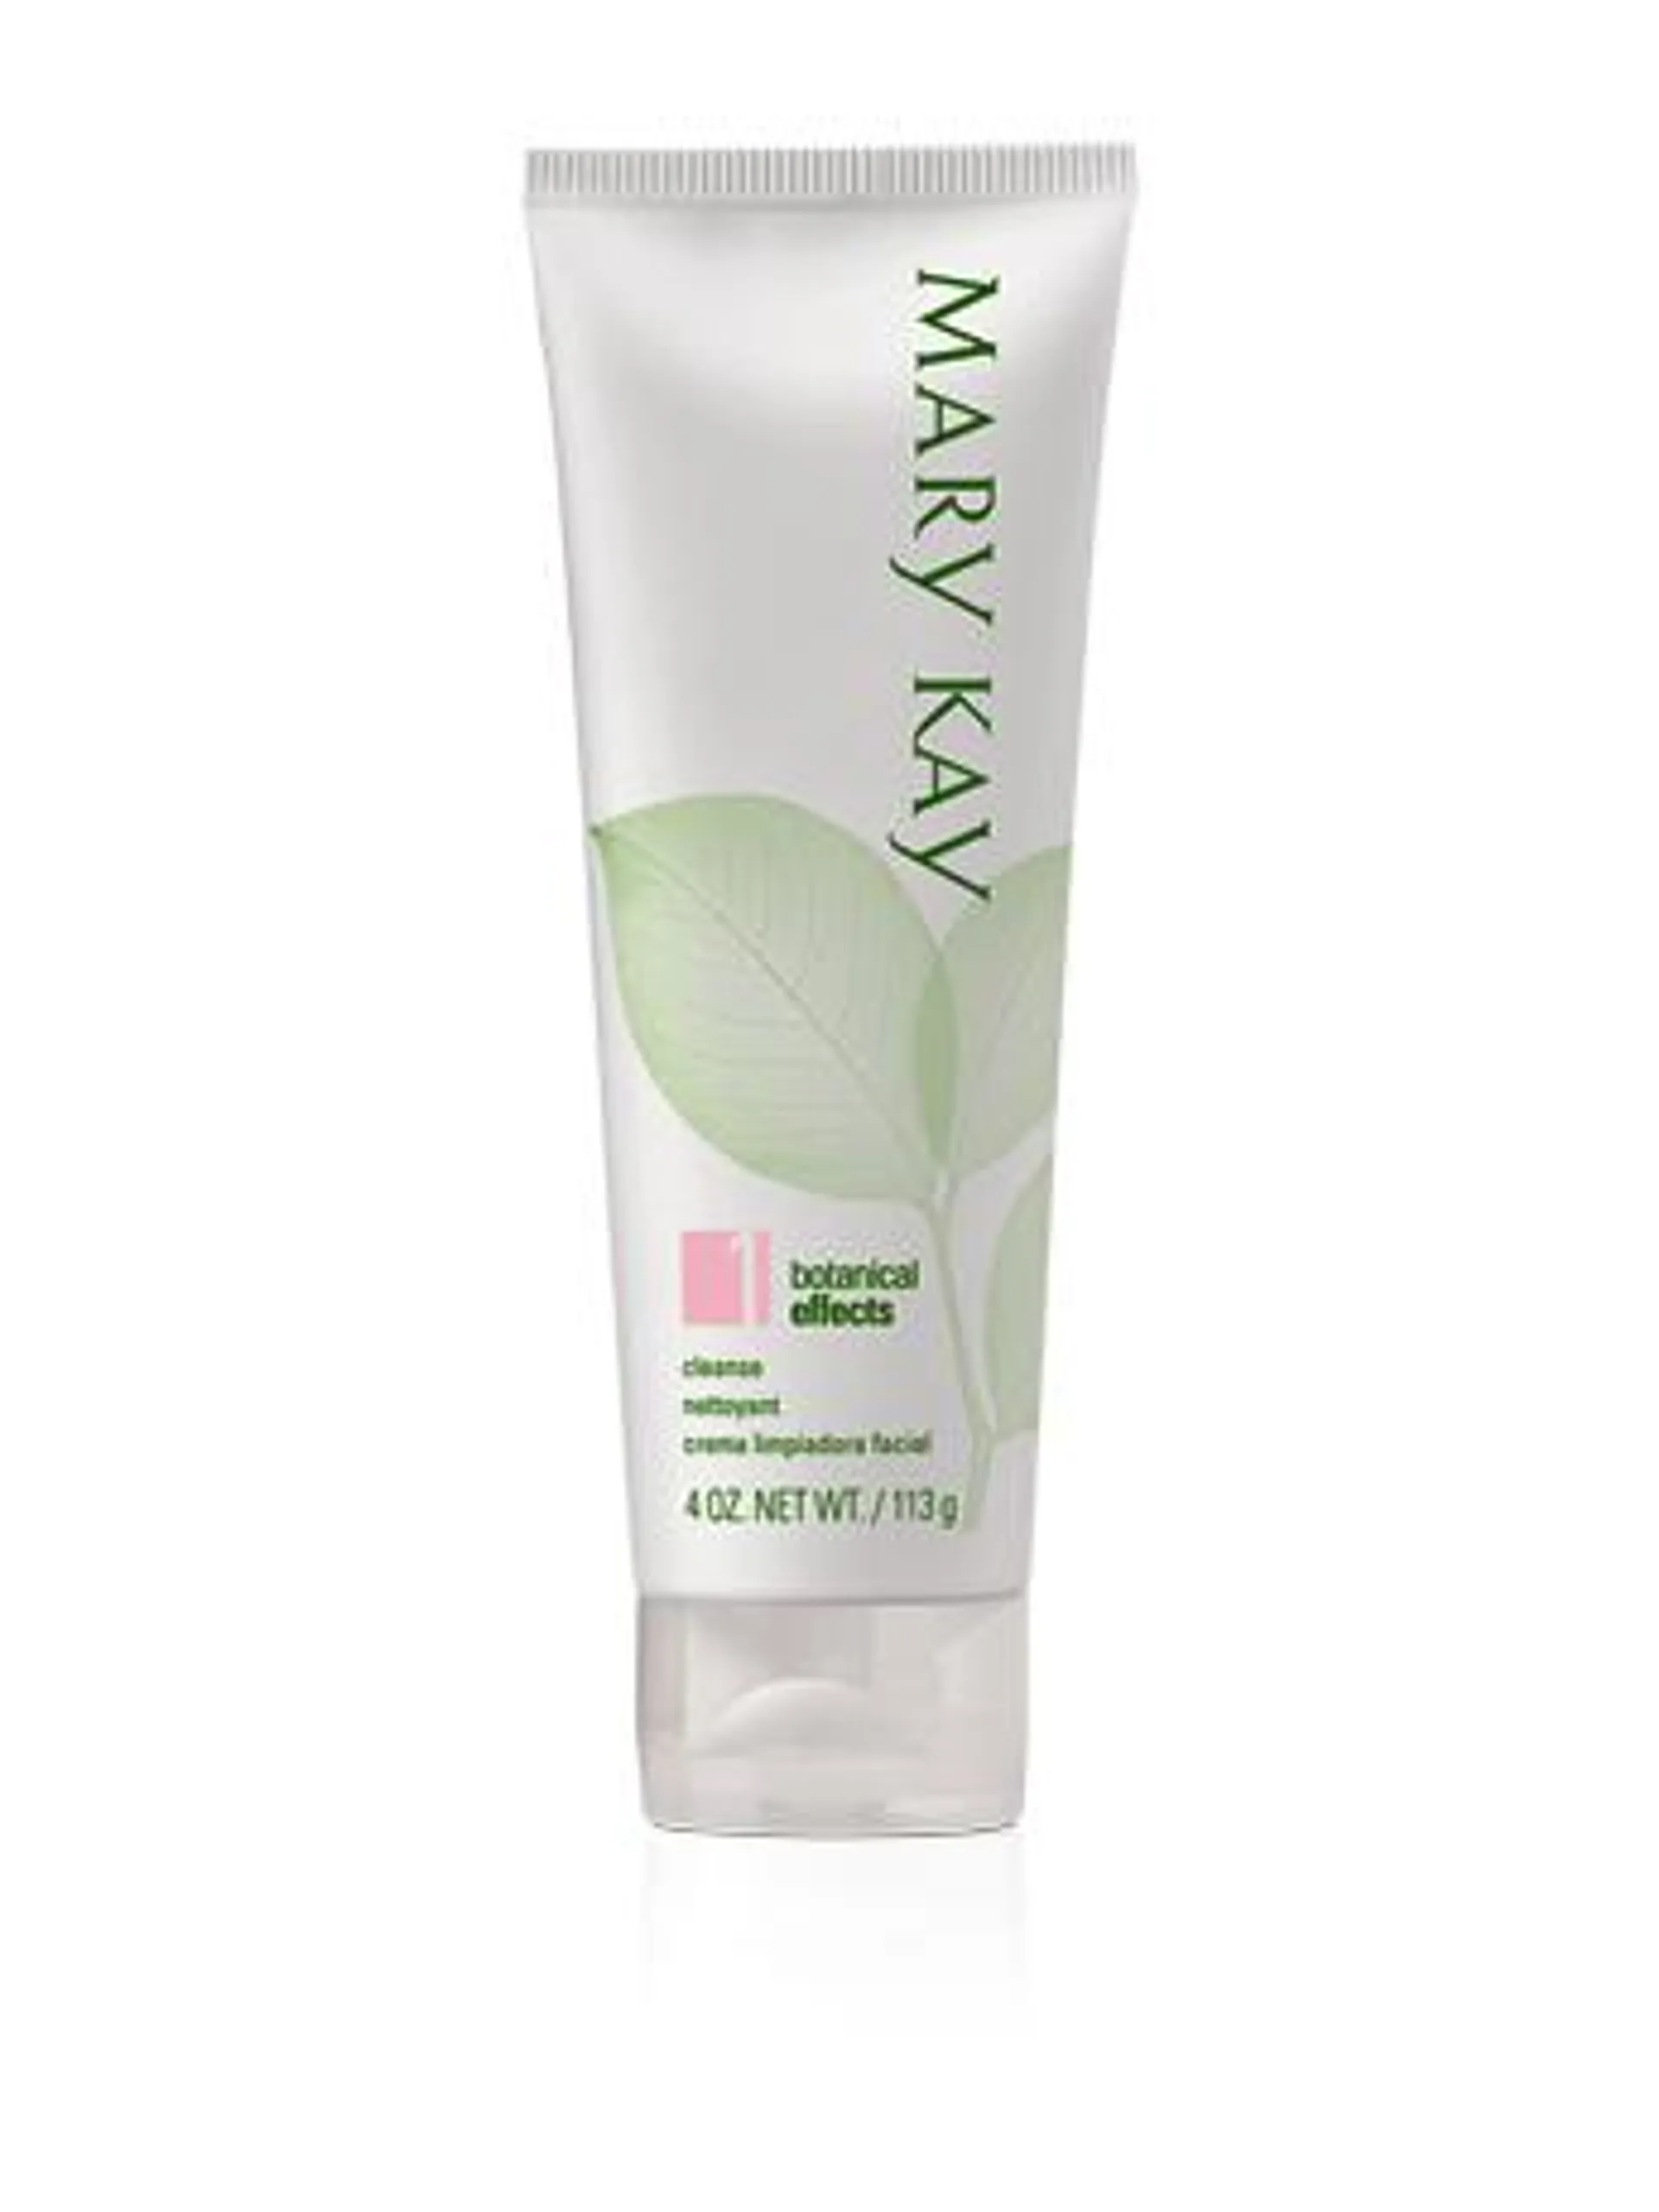 Botanical Effects® Cleanse Formula 1 (Dry Skin)